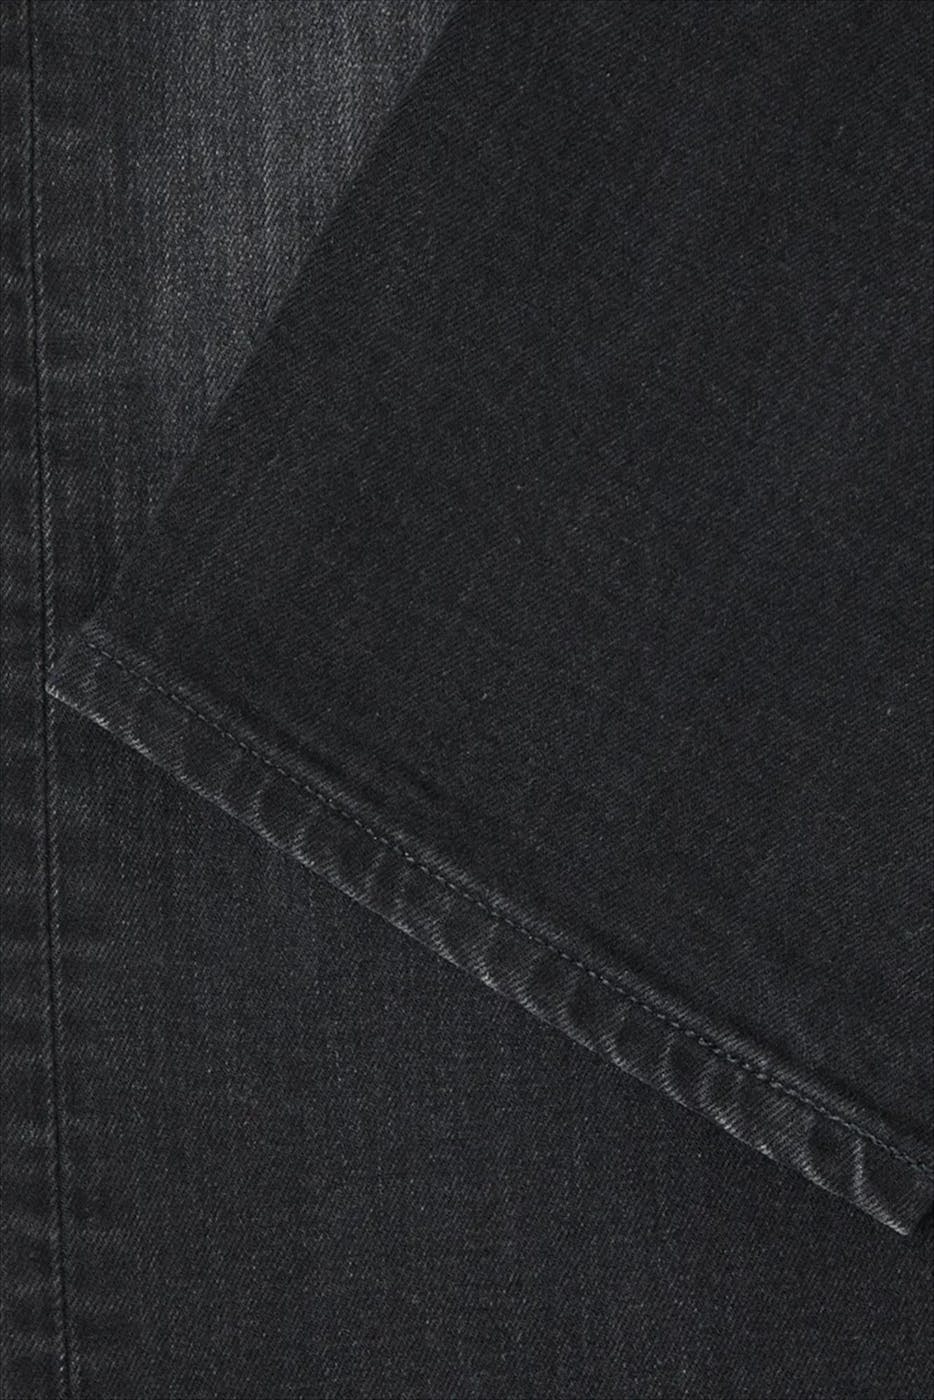 Edwin - Zwarte Regular Tapered jeans